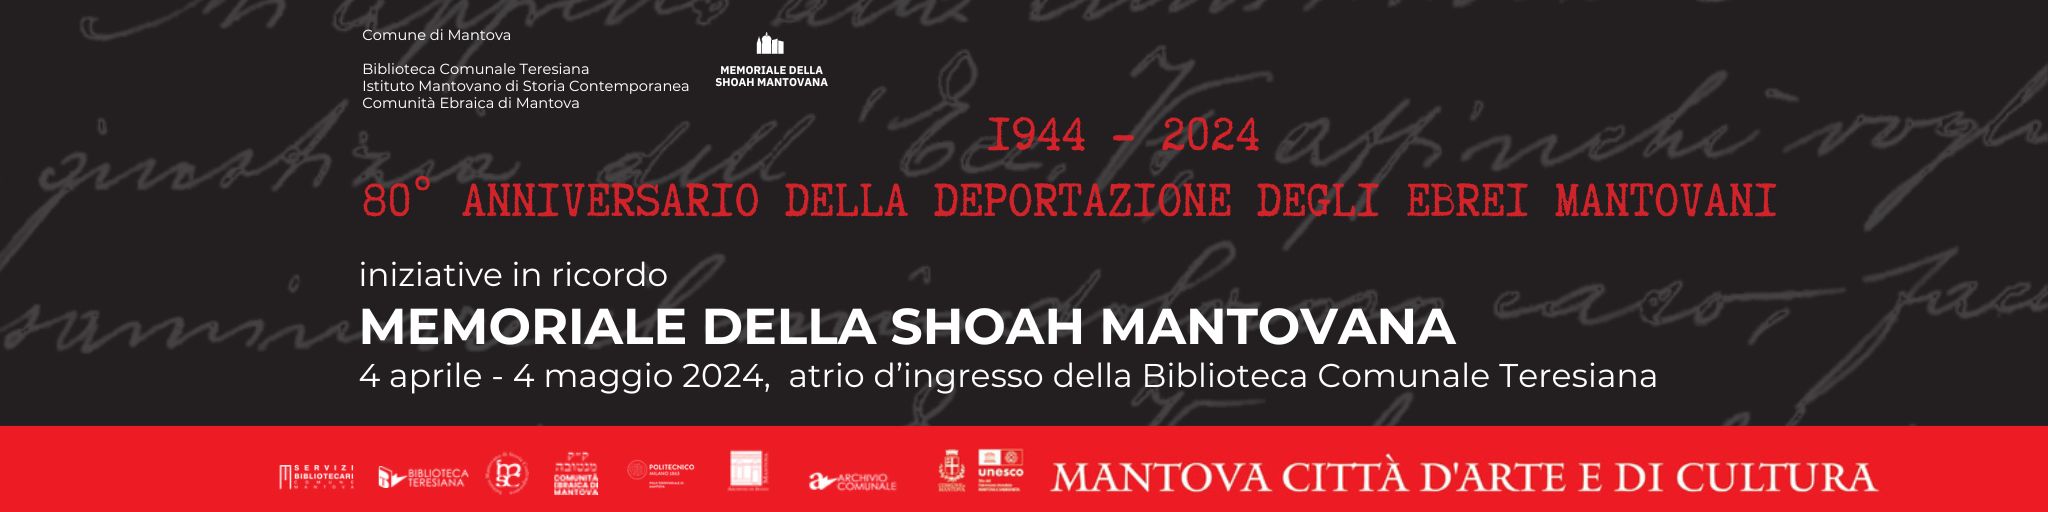 Memoriale shoah Mantovana